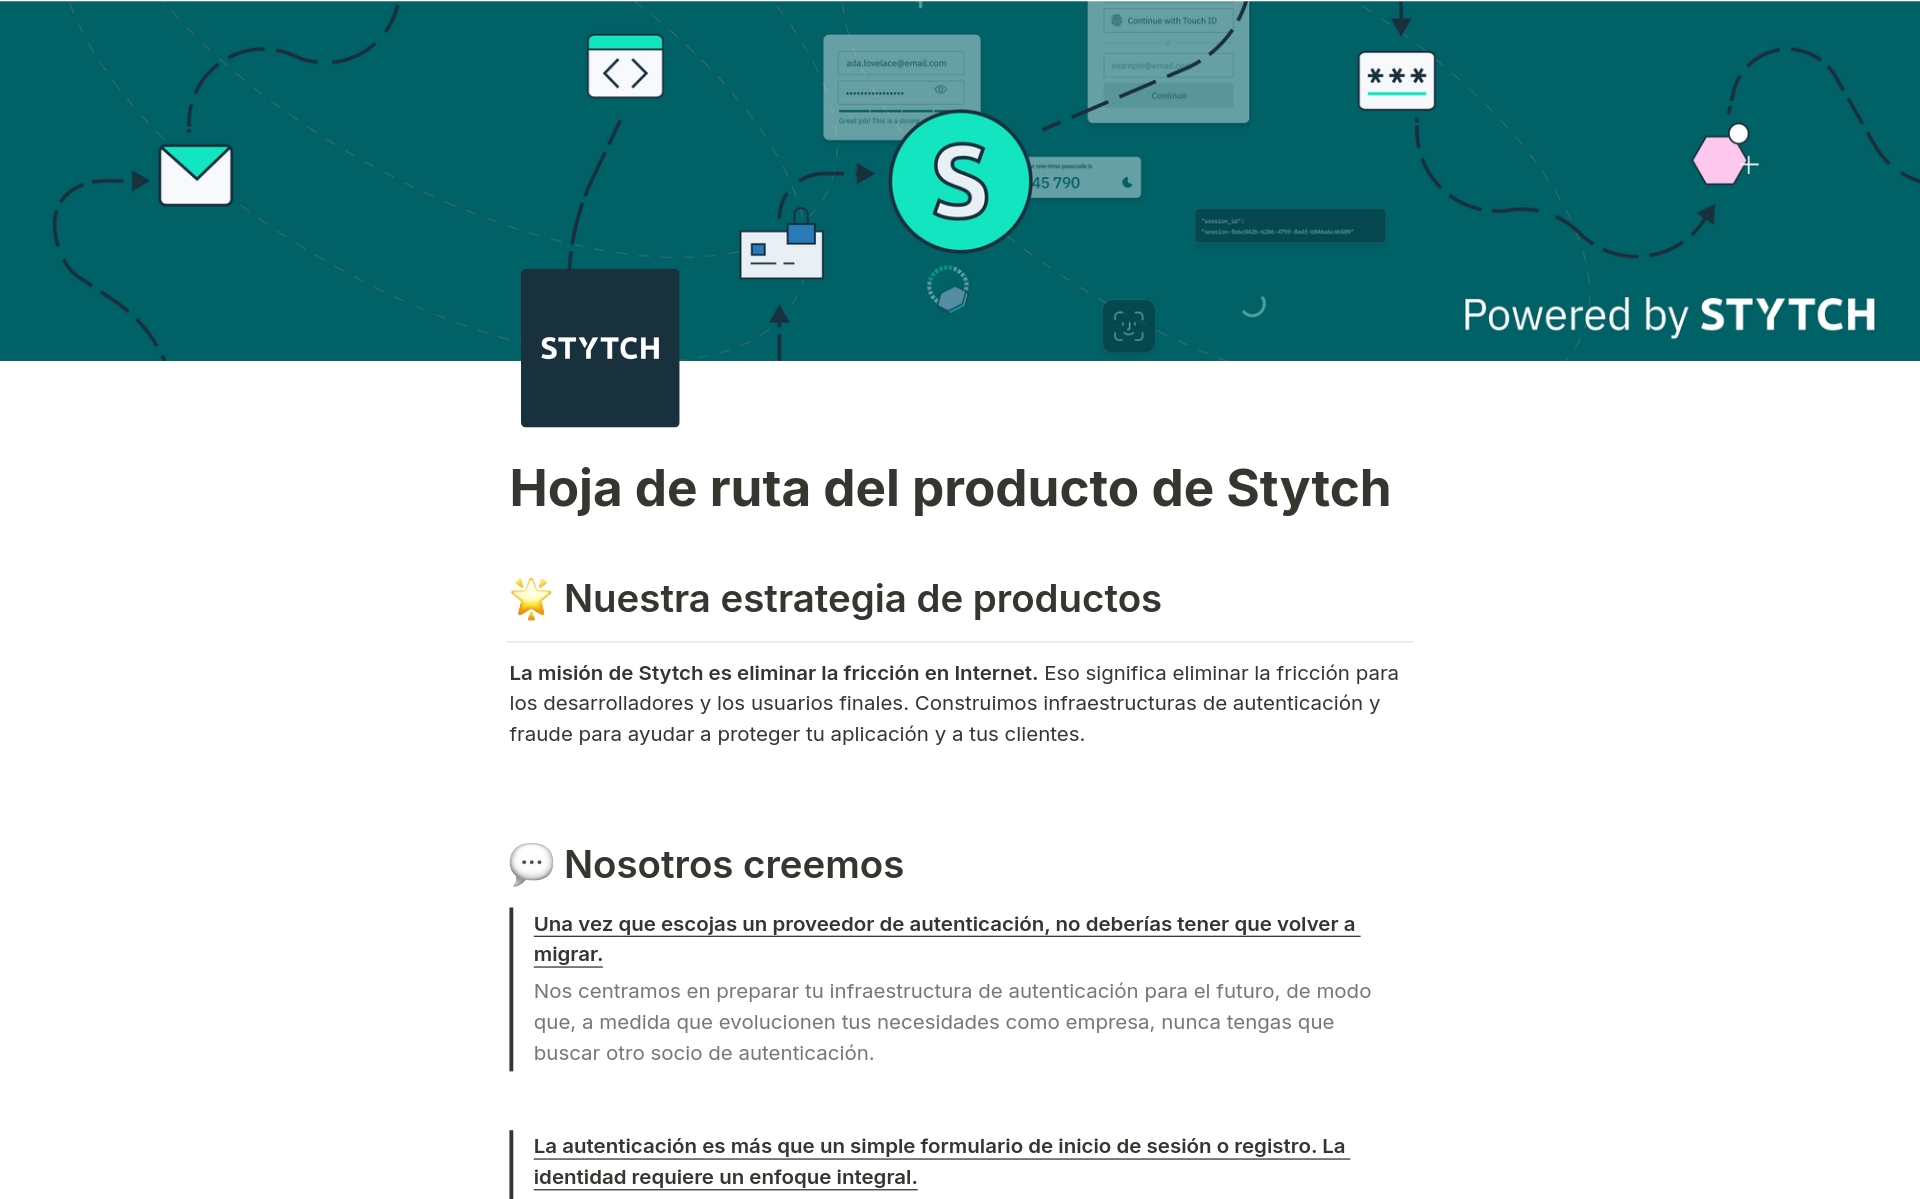 Vista previa de una plantilla para Hoja de ruta del producto de Stytch